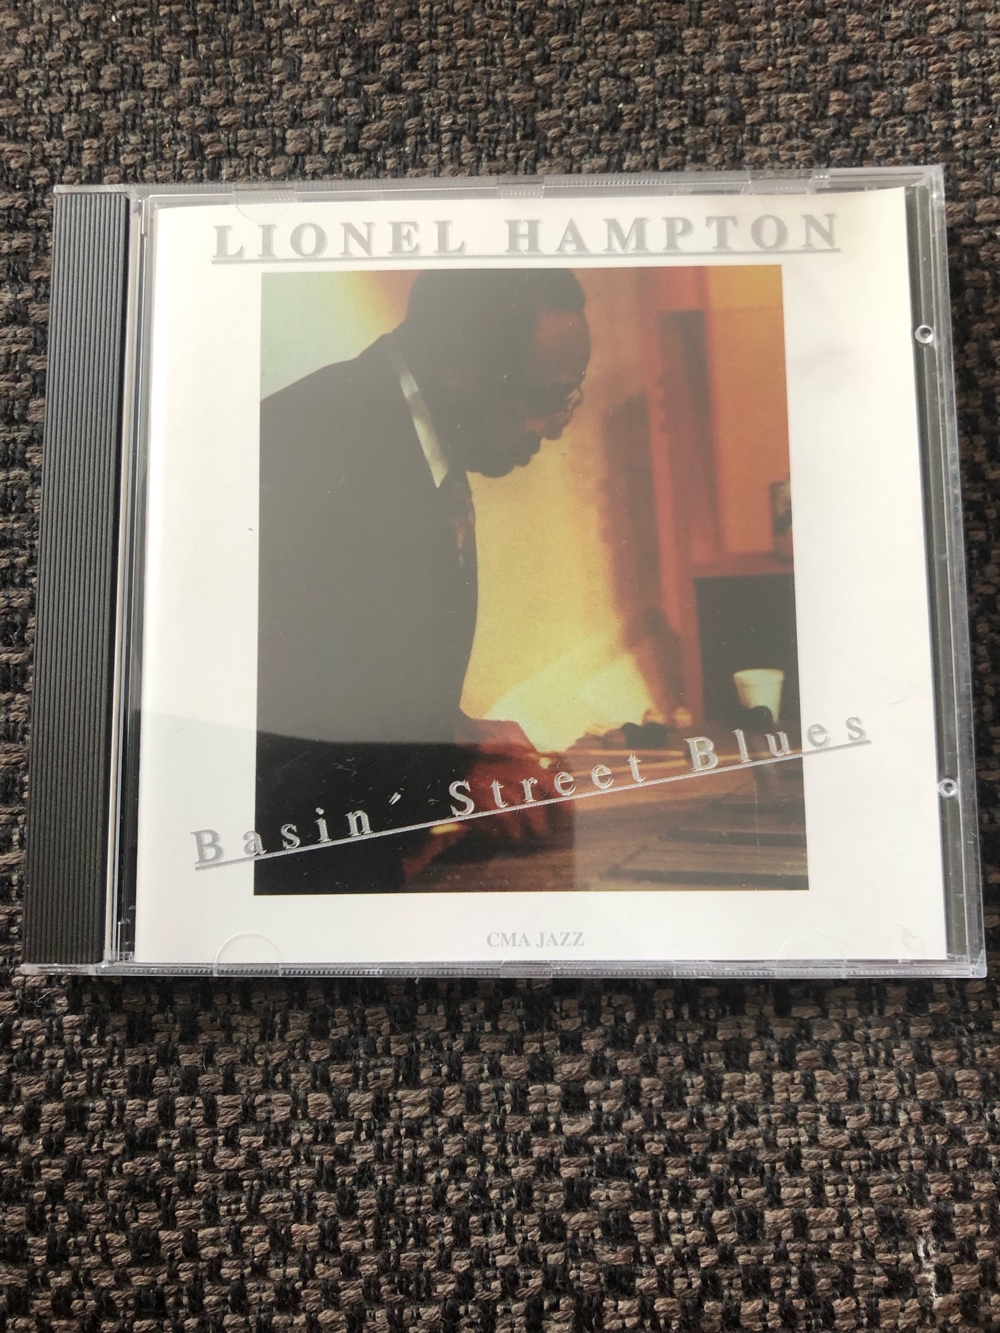 CD Lionel Hampton: Basin' Street Blues